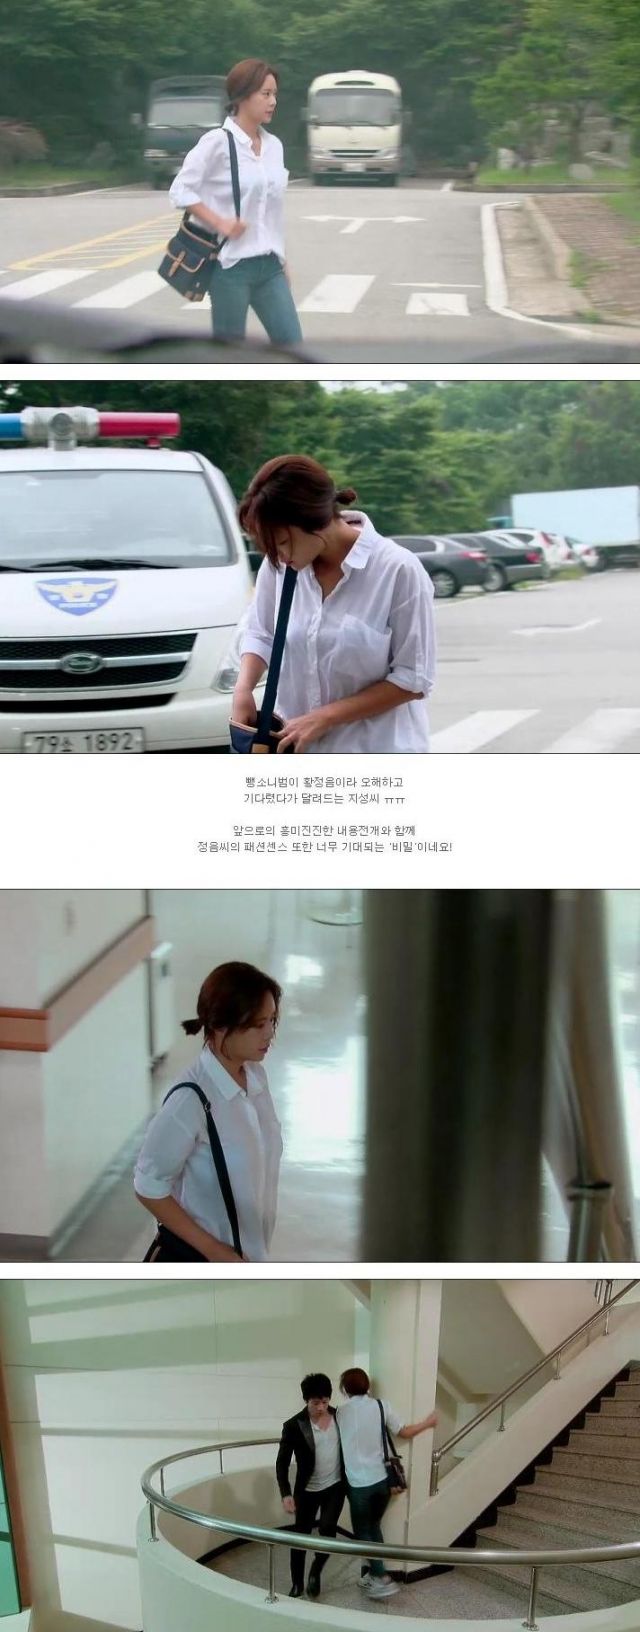 episode 2 captures for the Korean drama 'Secrets'